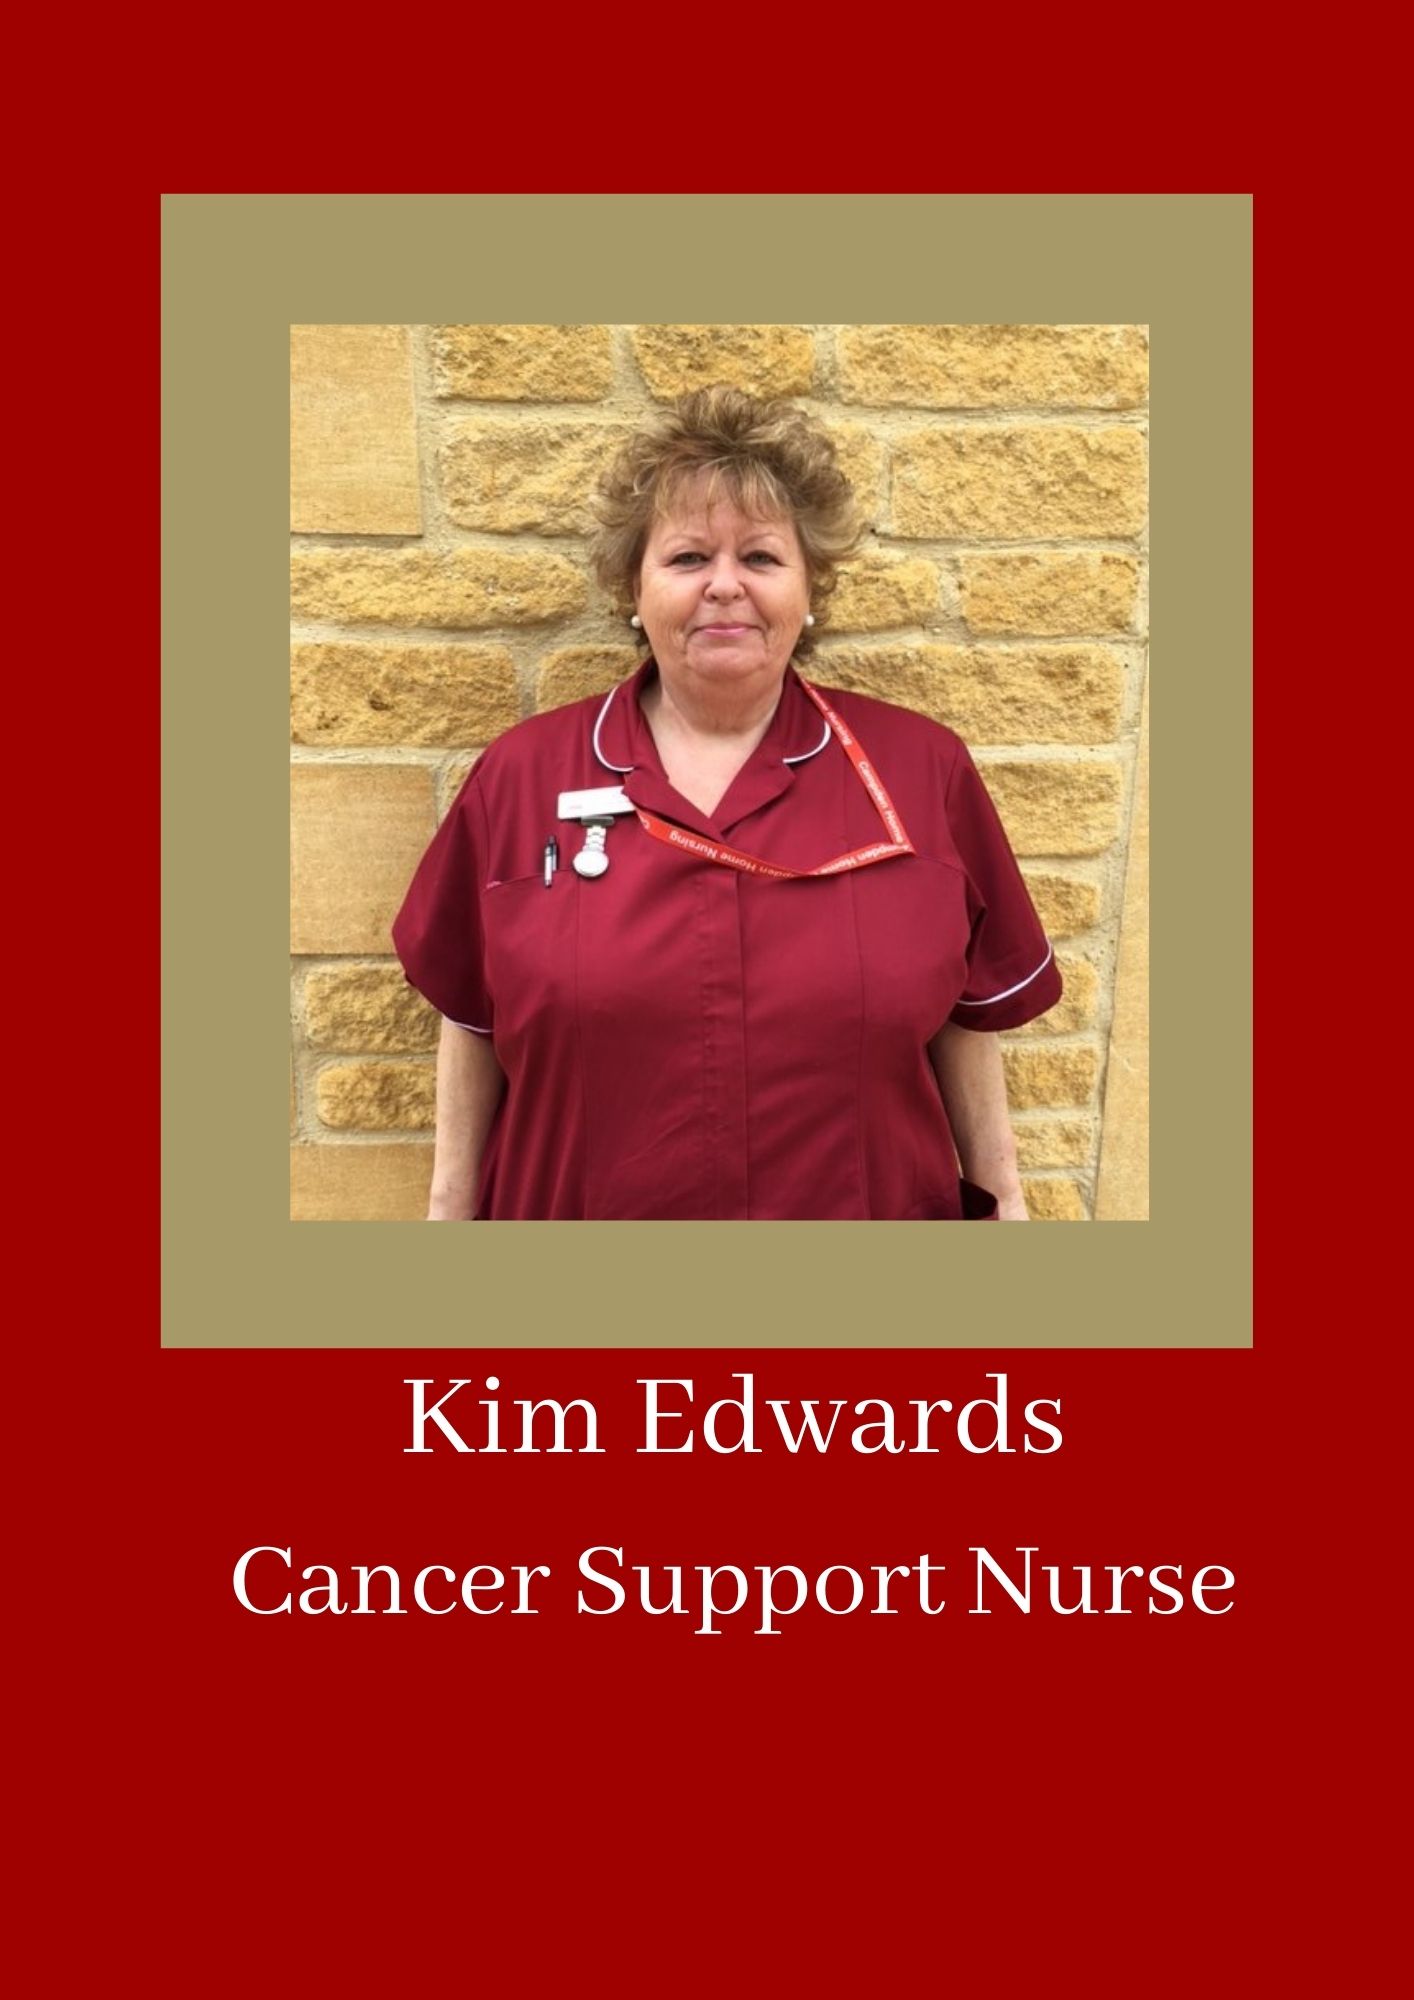 Kim Edwards, Cancer Support Nurse